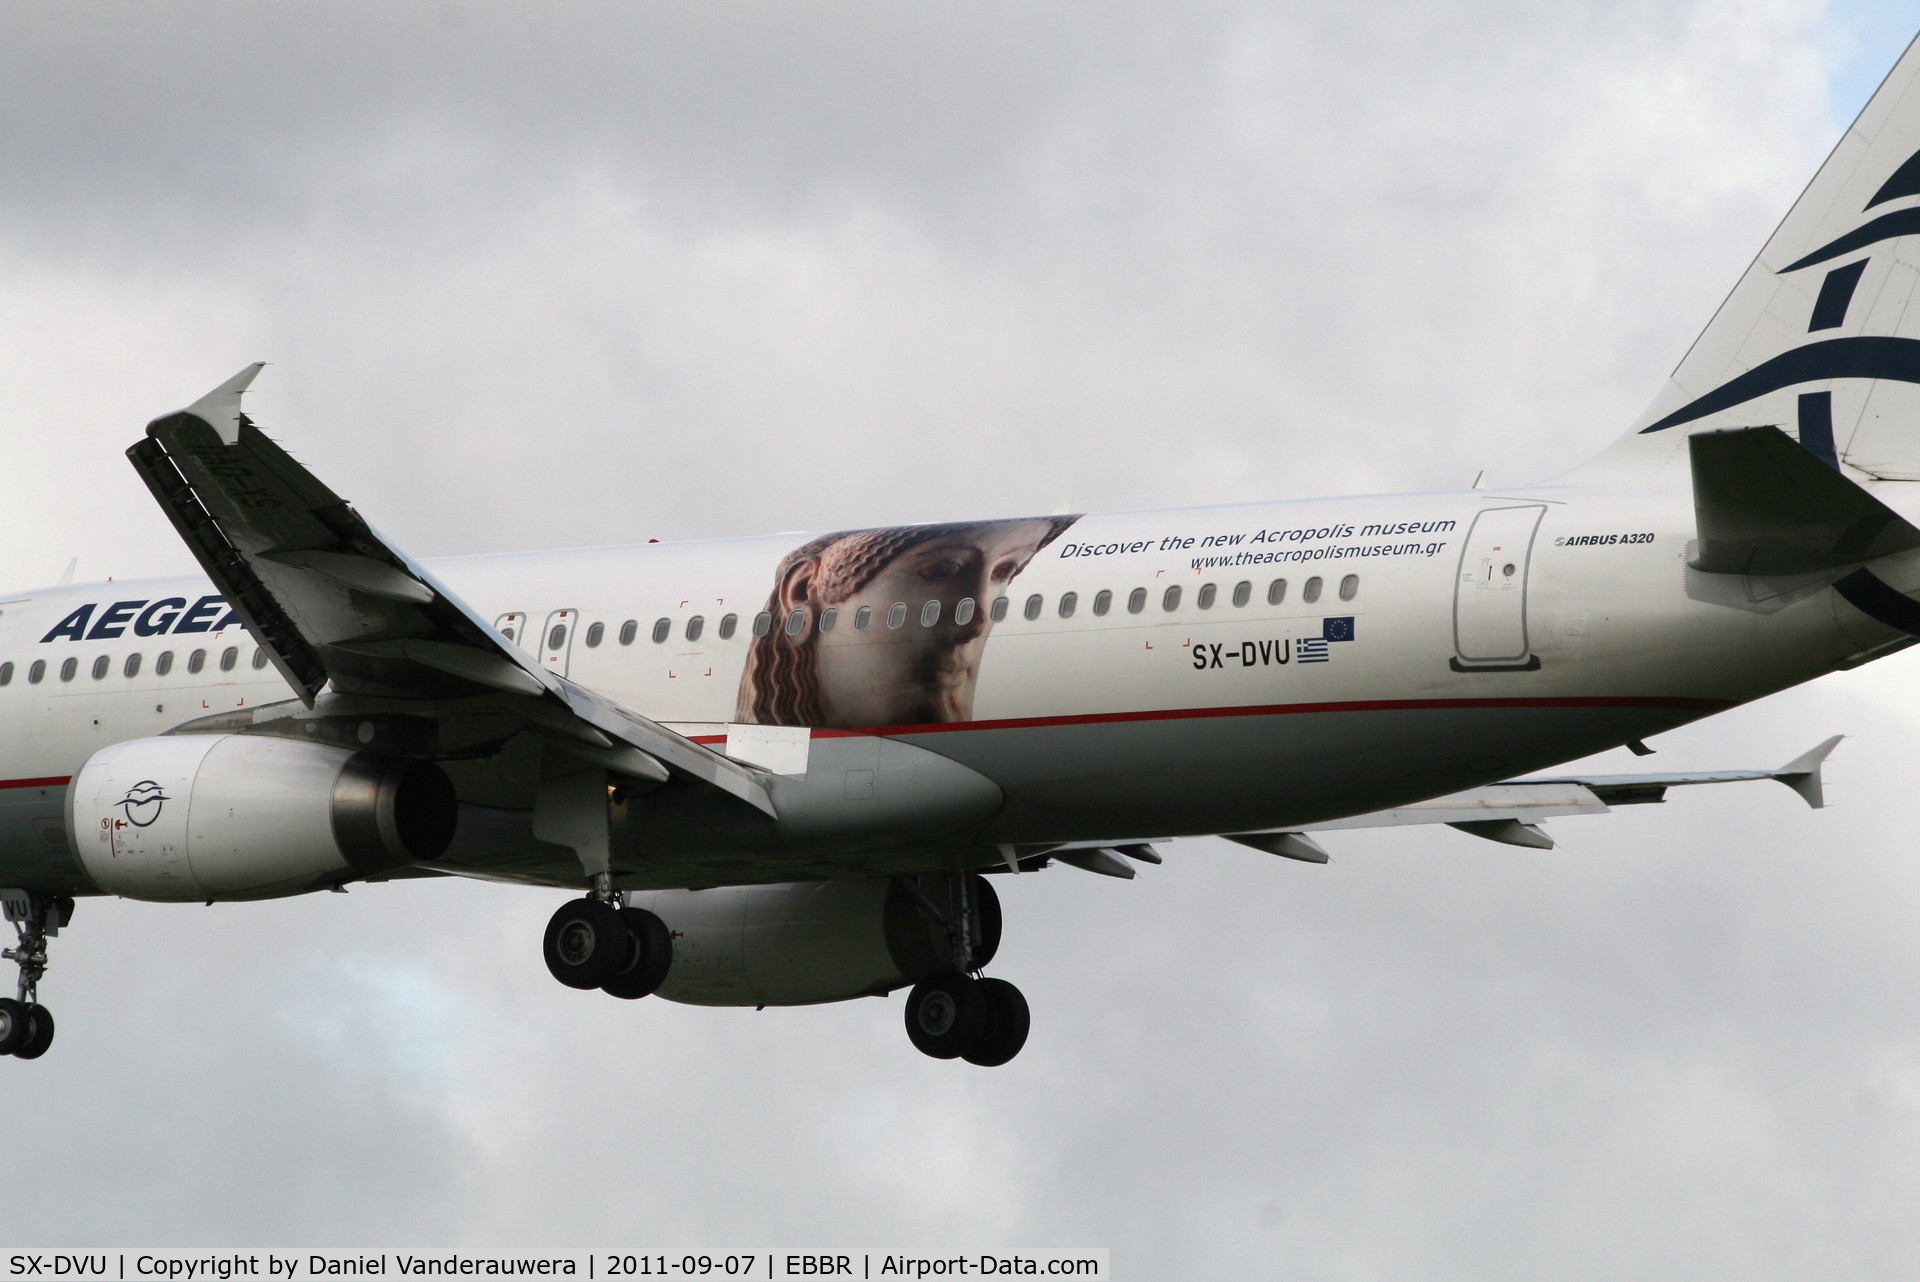 SX-DVU, 2009 Airbus A320-232 C/N 3753, Flight 3A620 is descending to RWY 25L